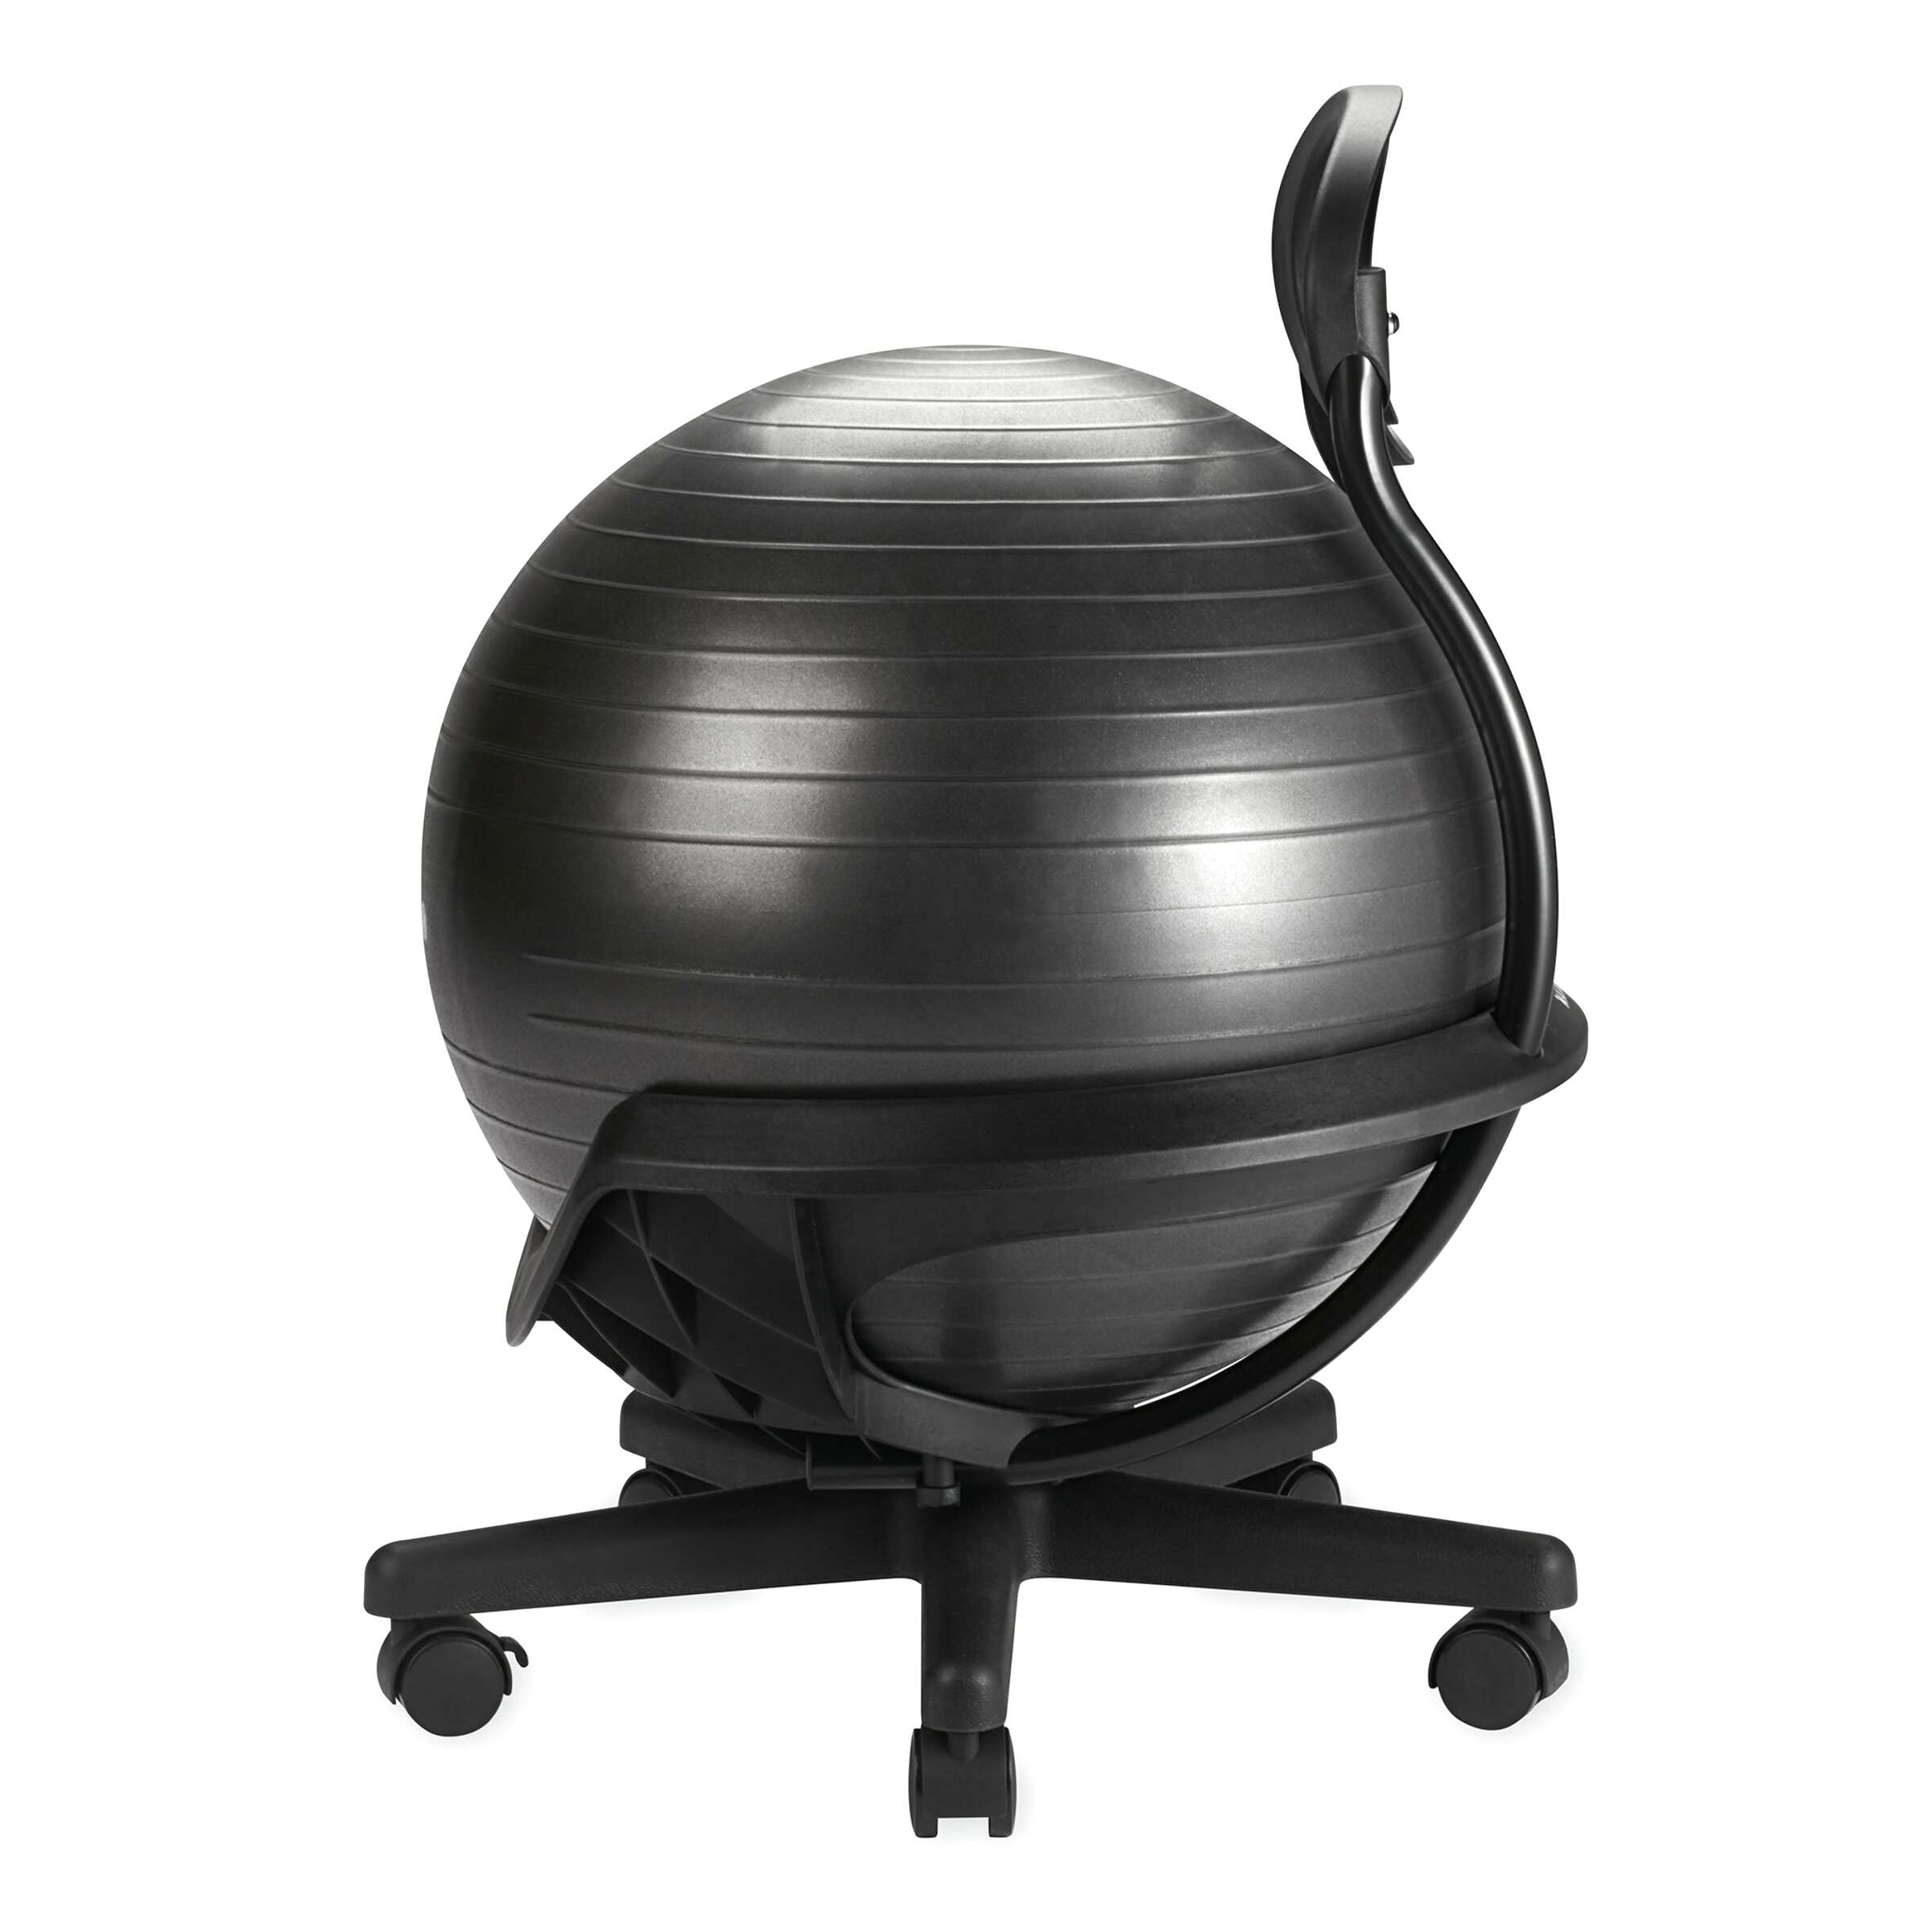 05 63057 Ultimate BalanceBall Chair B Ball%2Bchair 